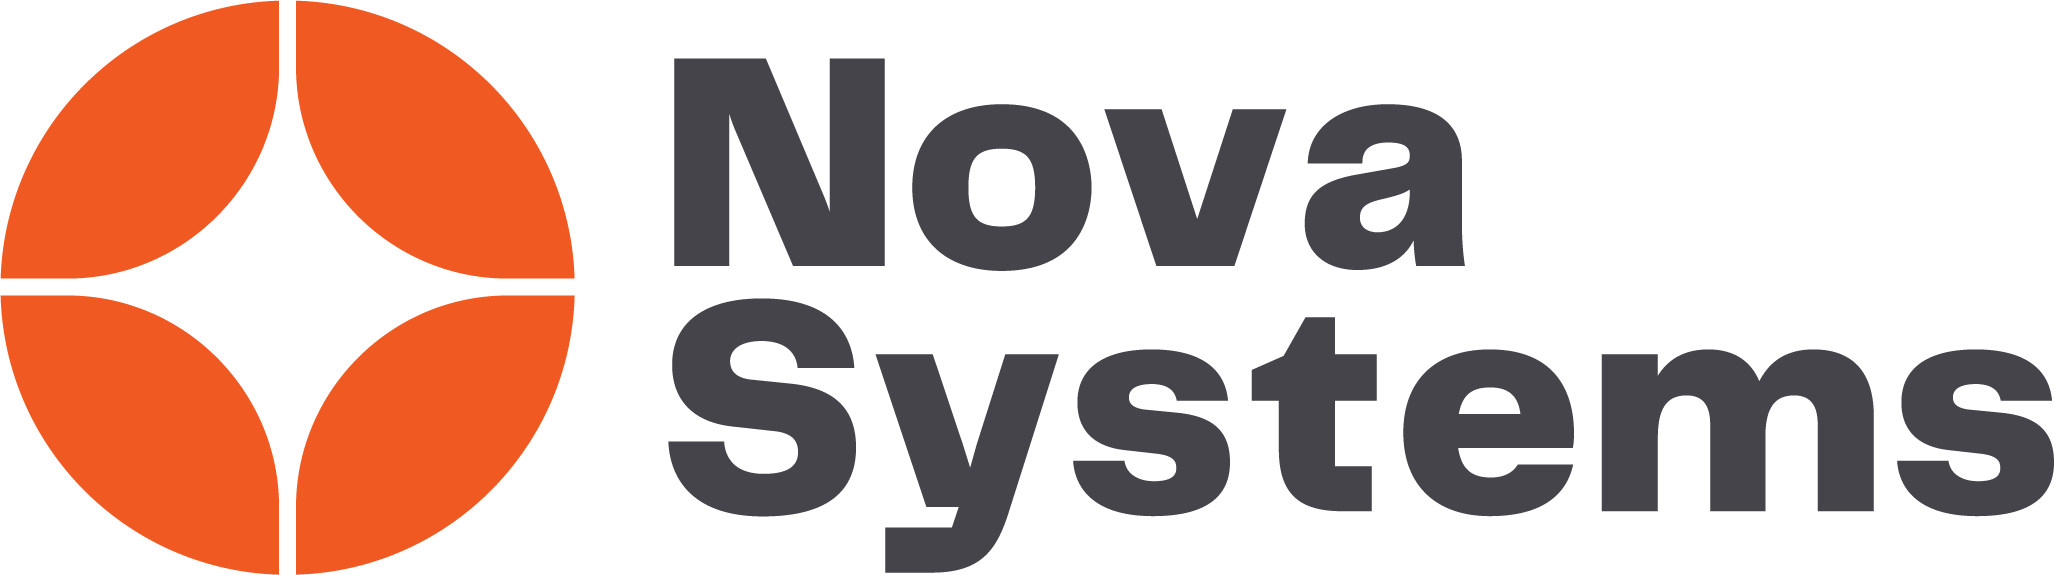 Nova Systems Logo.png